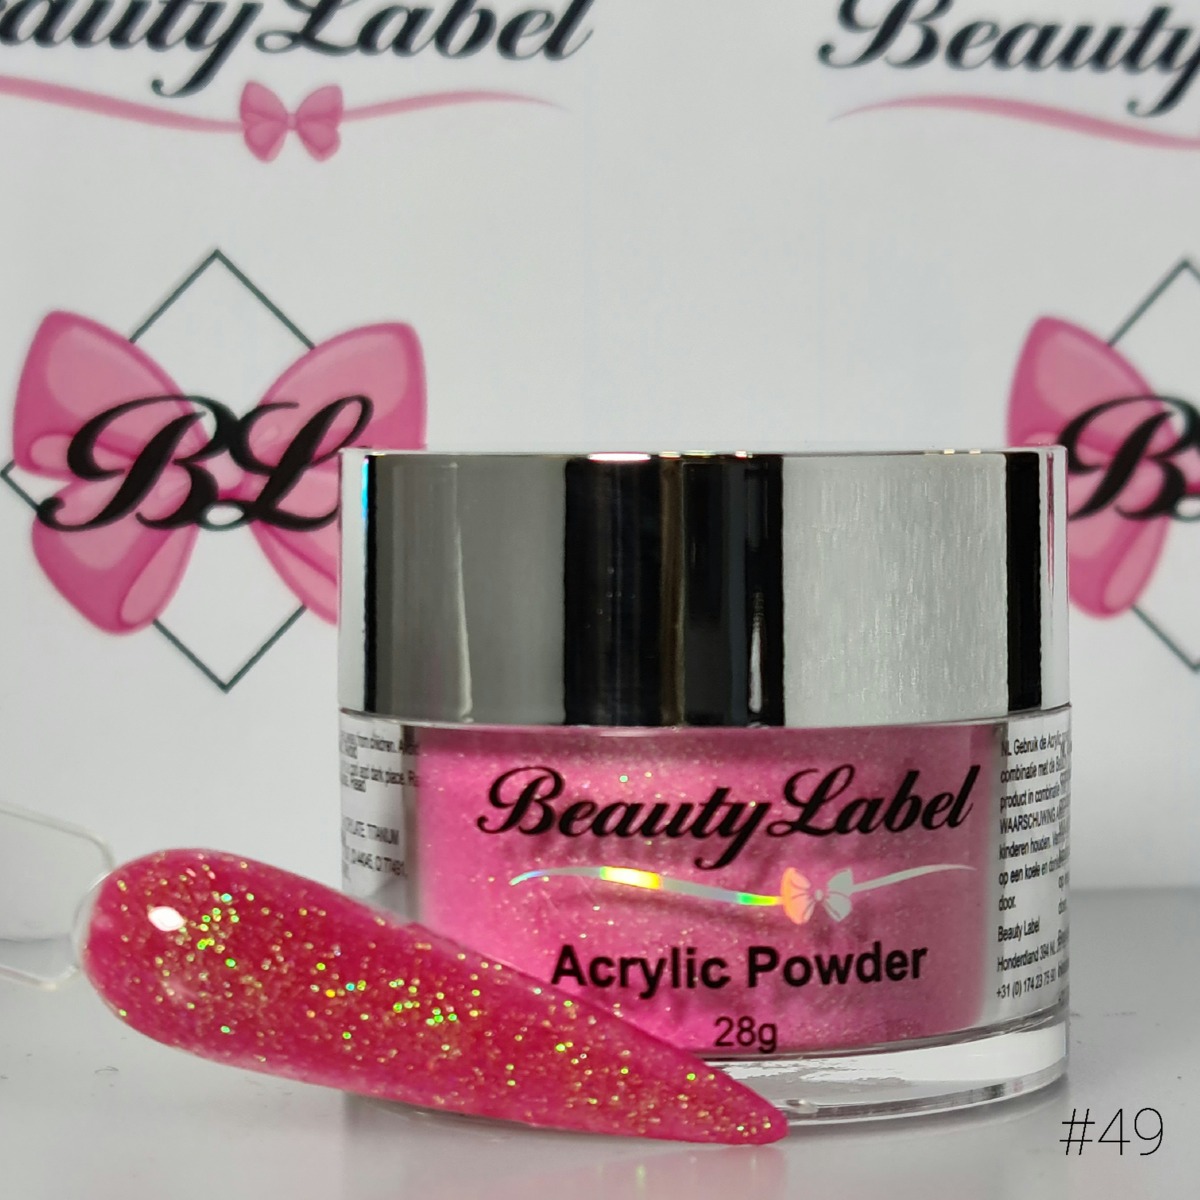 Beauty Label Color Acrylic Powder #49